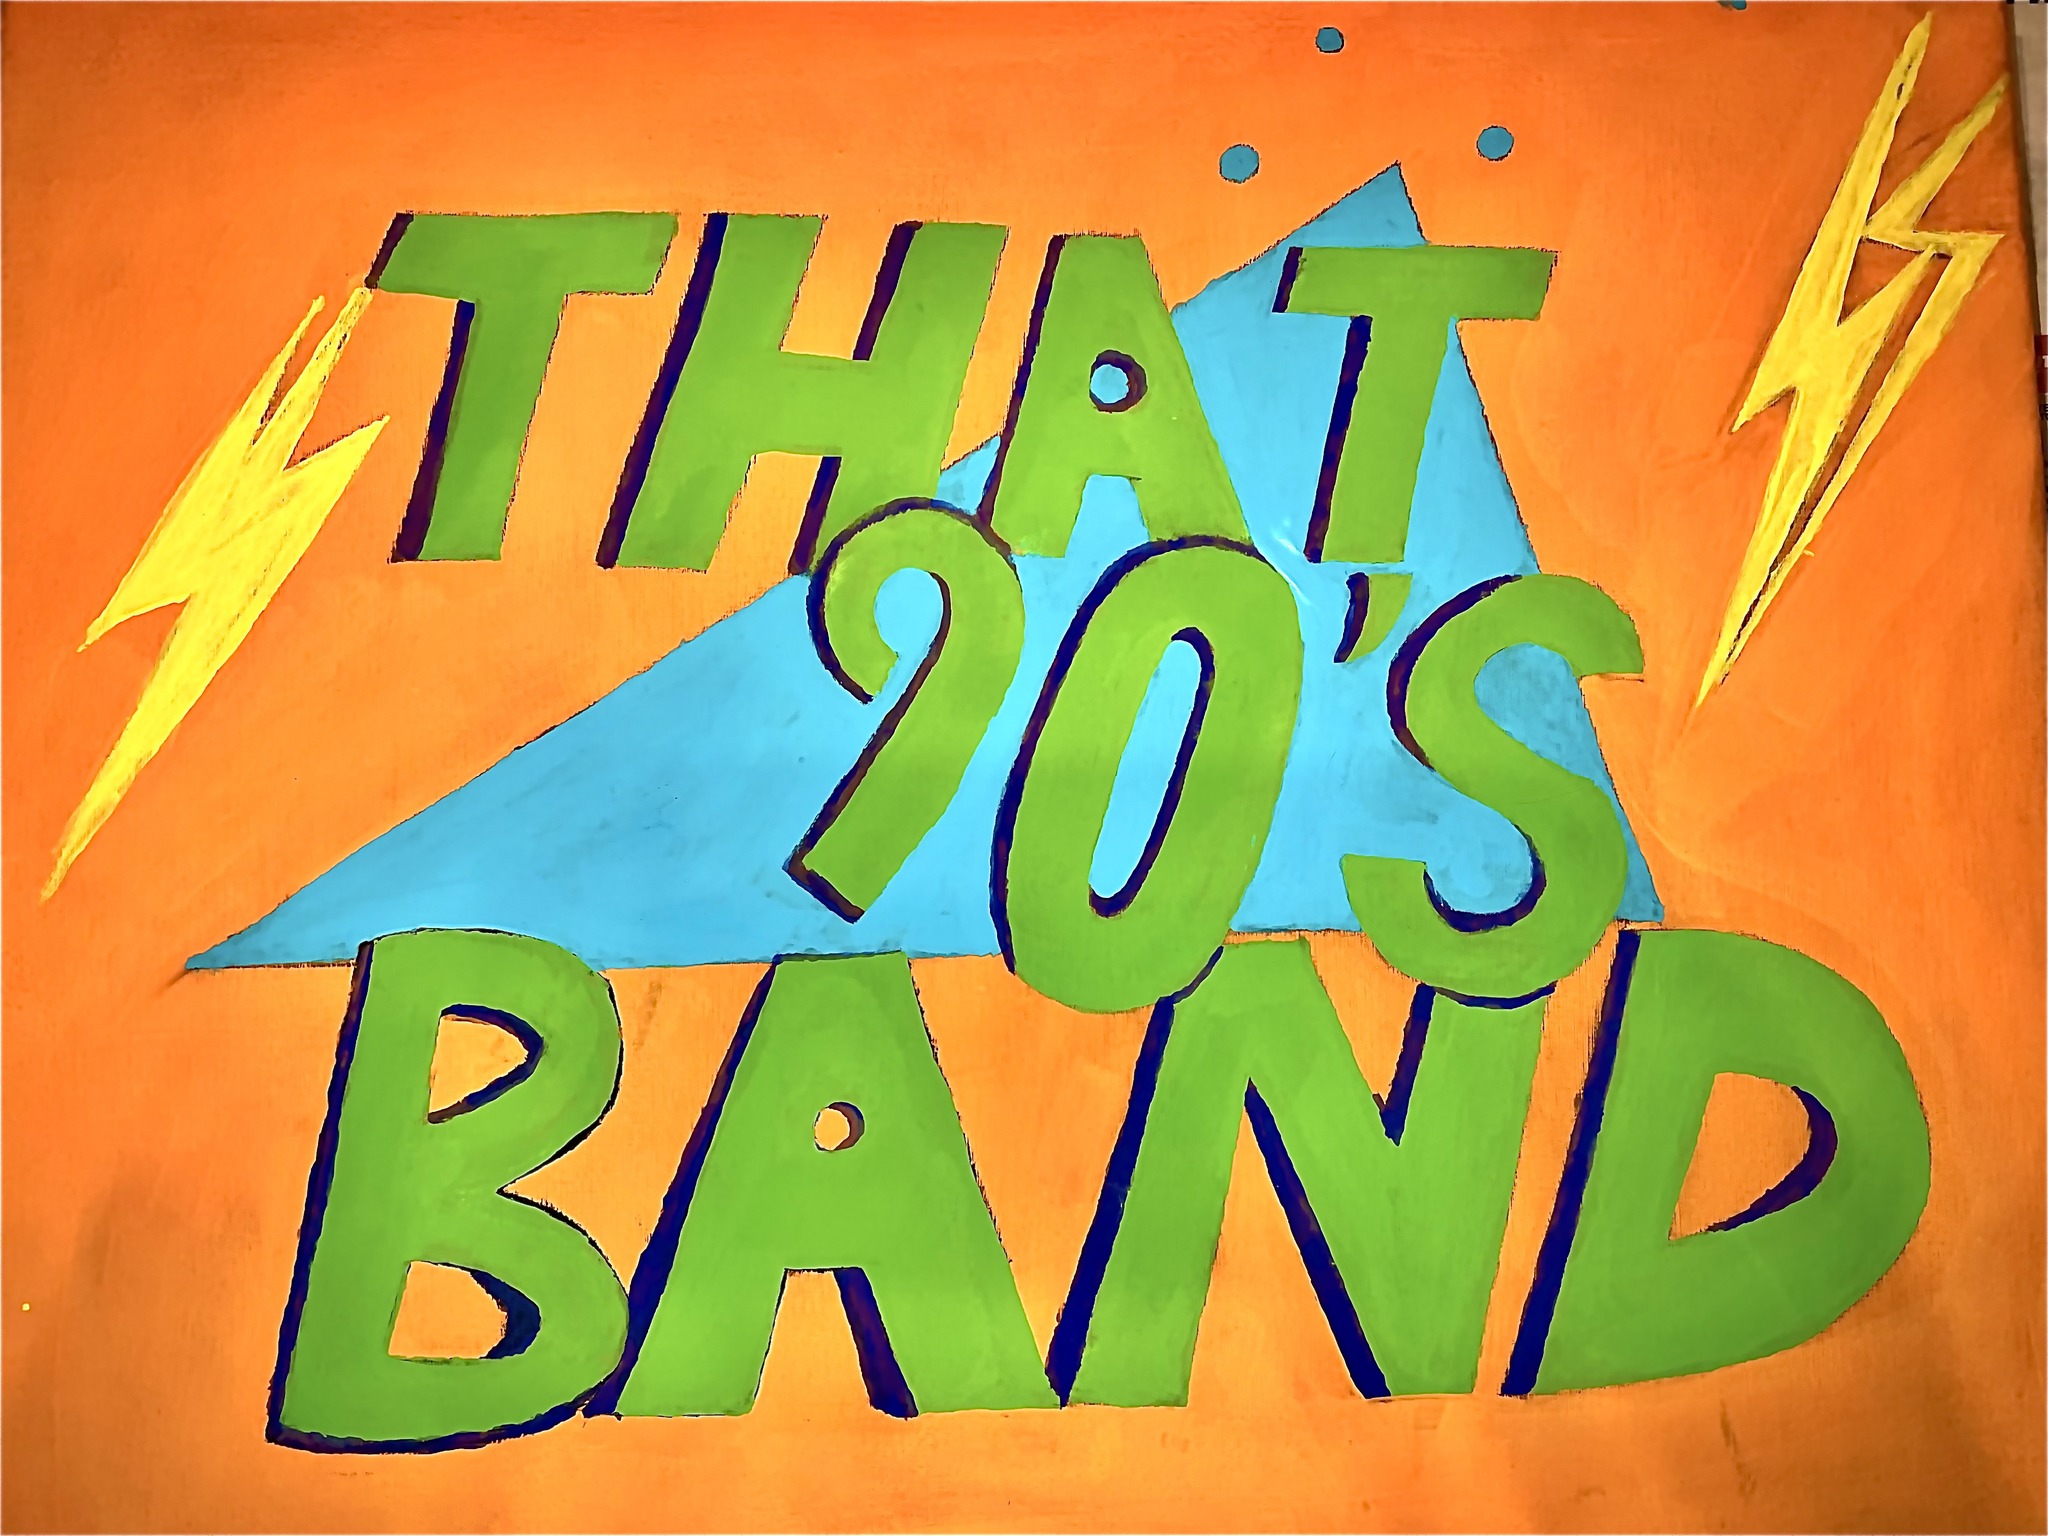 The Nineties Band